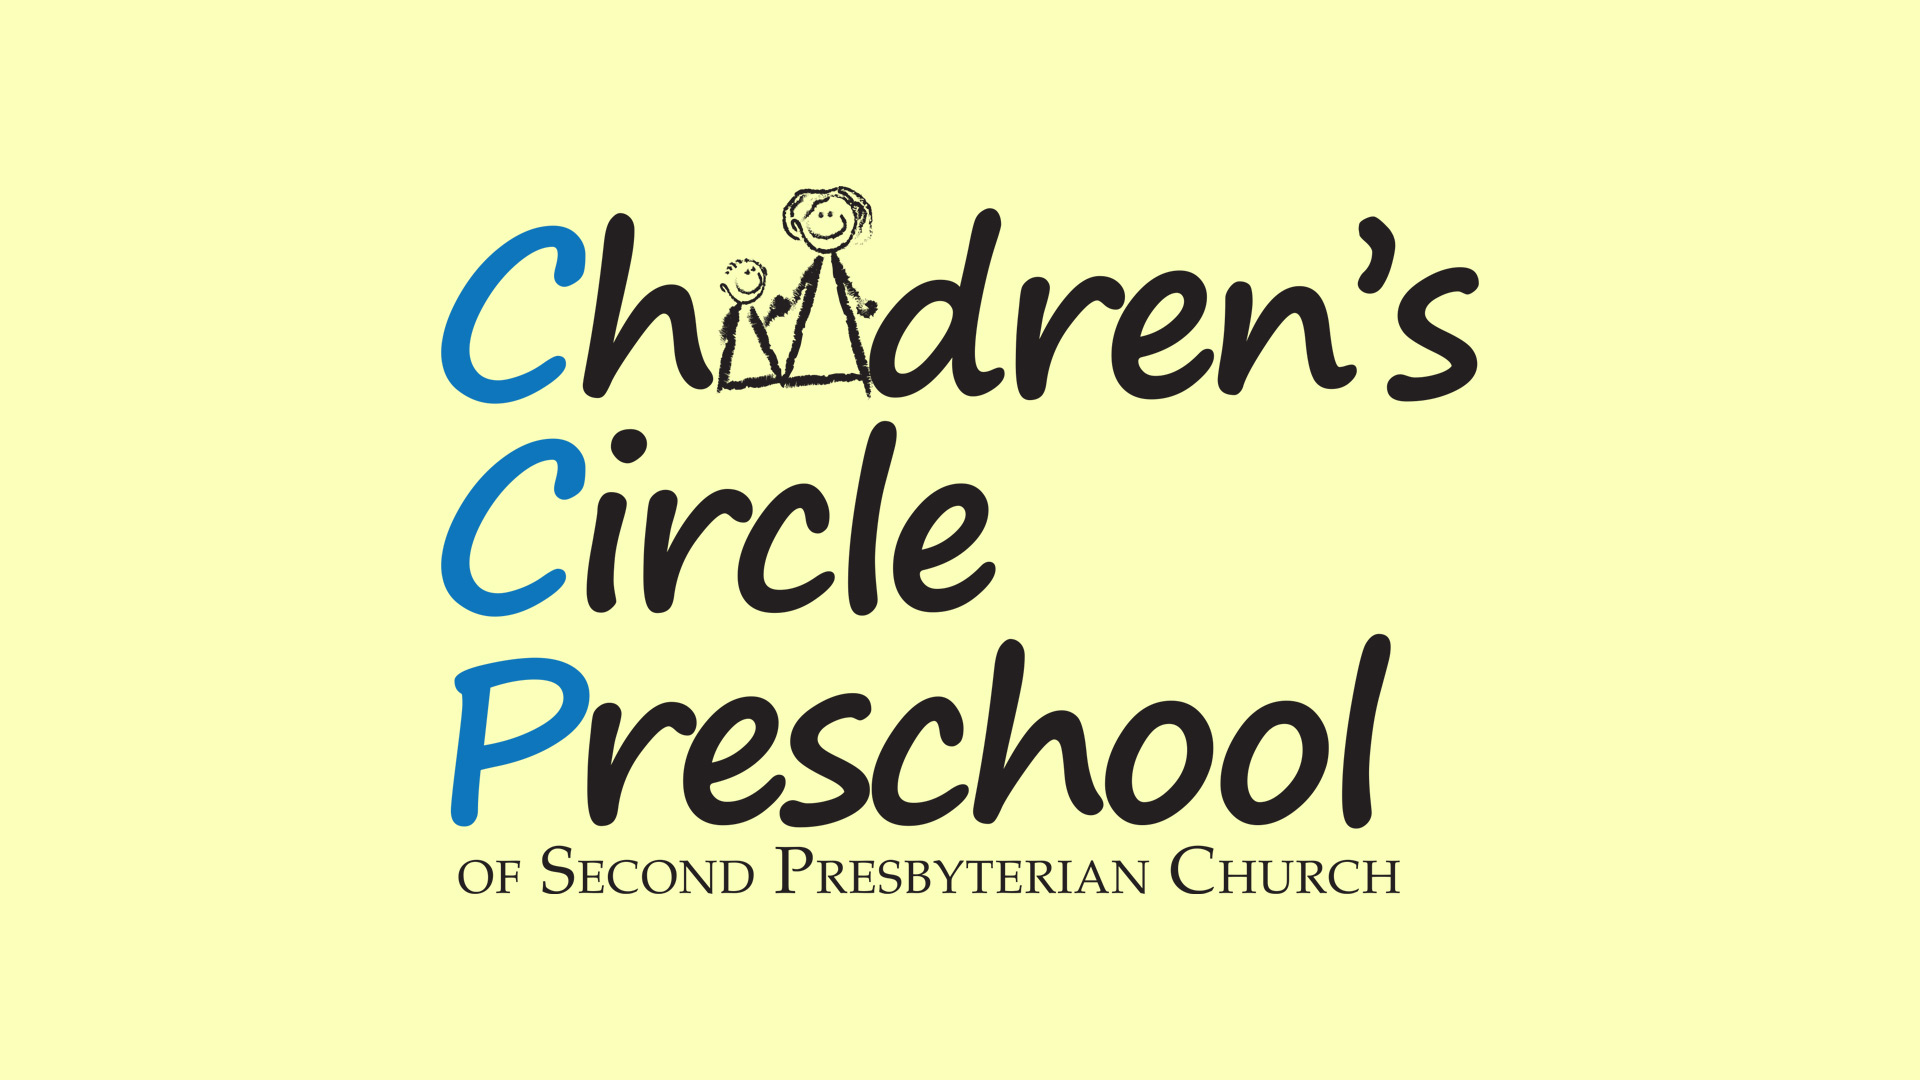 Join our preschool team!
